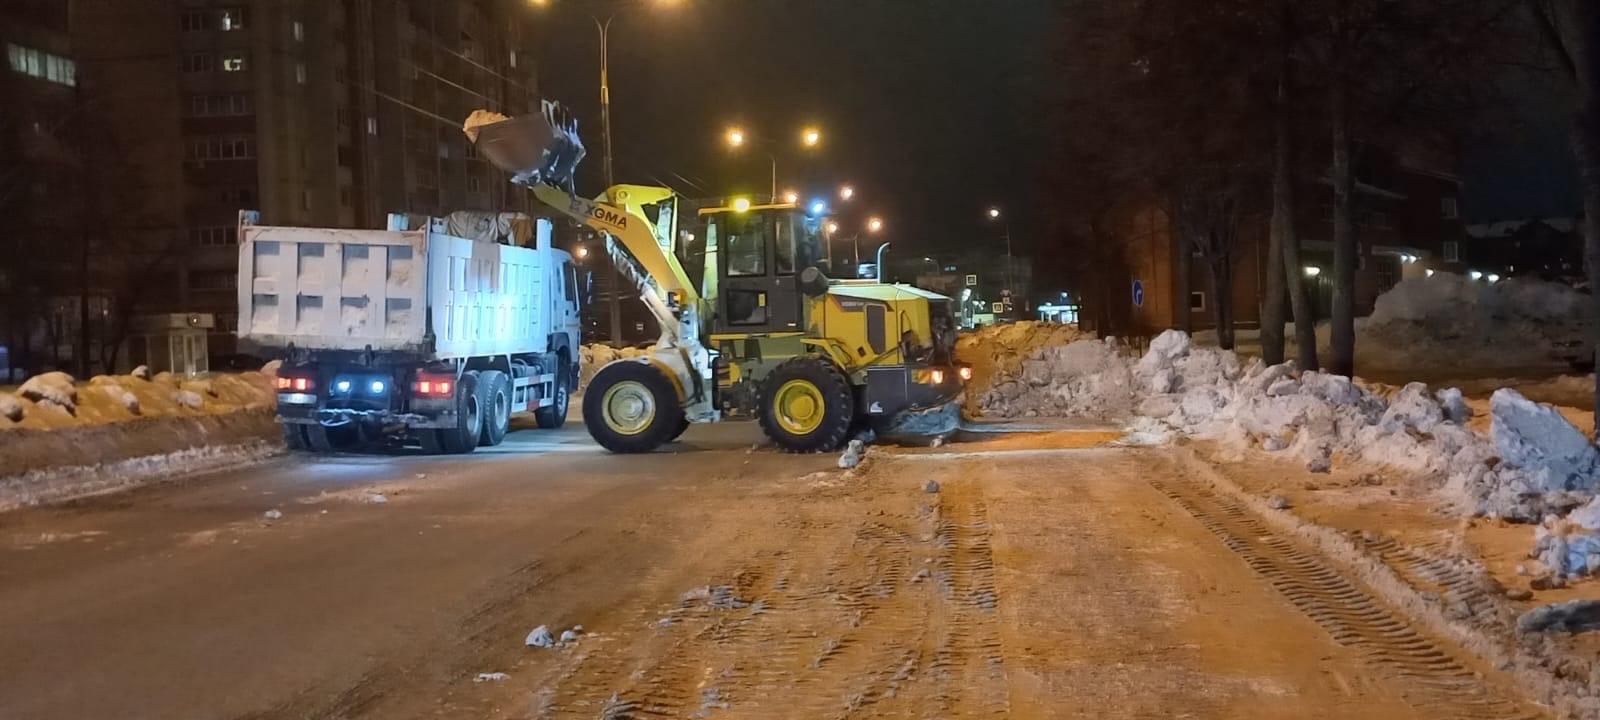 В Йошкар-Оле по ночам убирают снег с дорог 